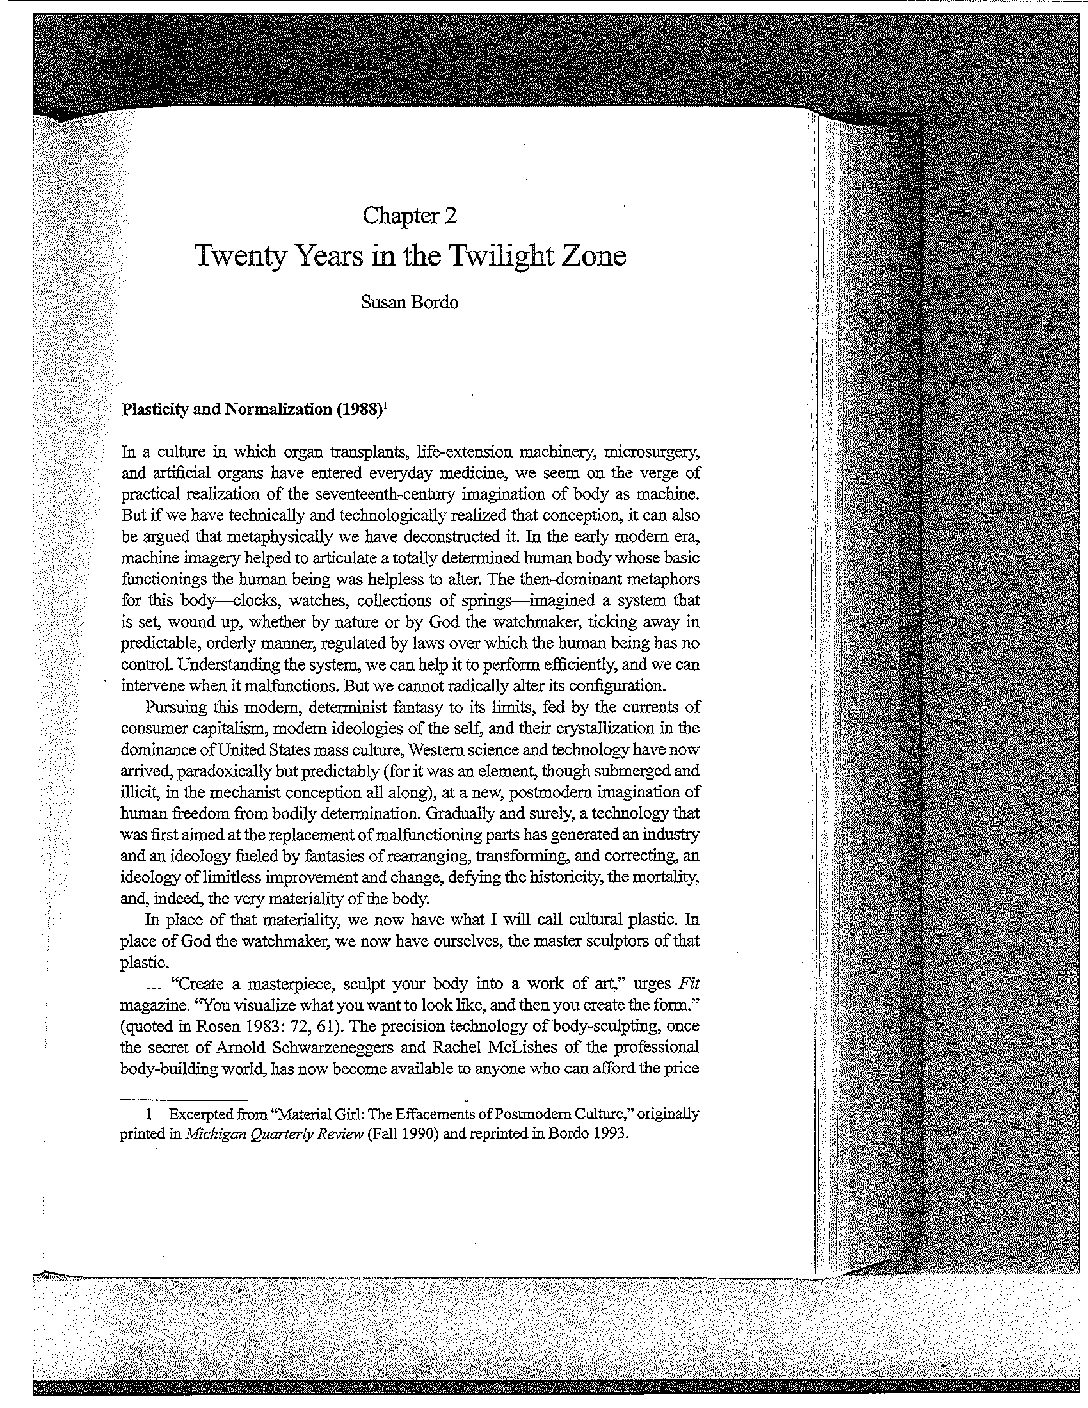 Twenty Years in the Twilight Zone